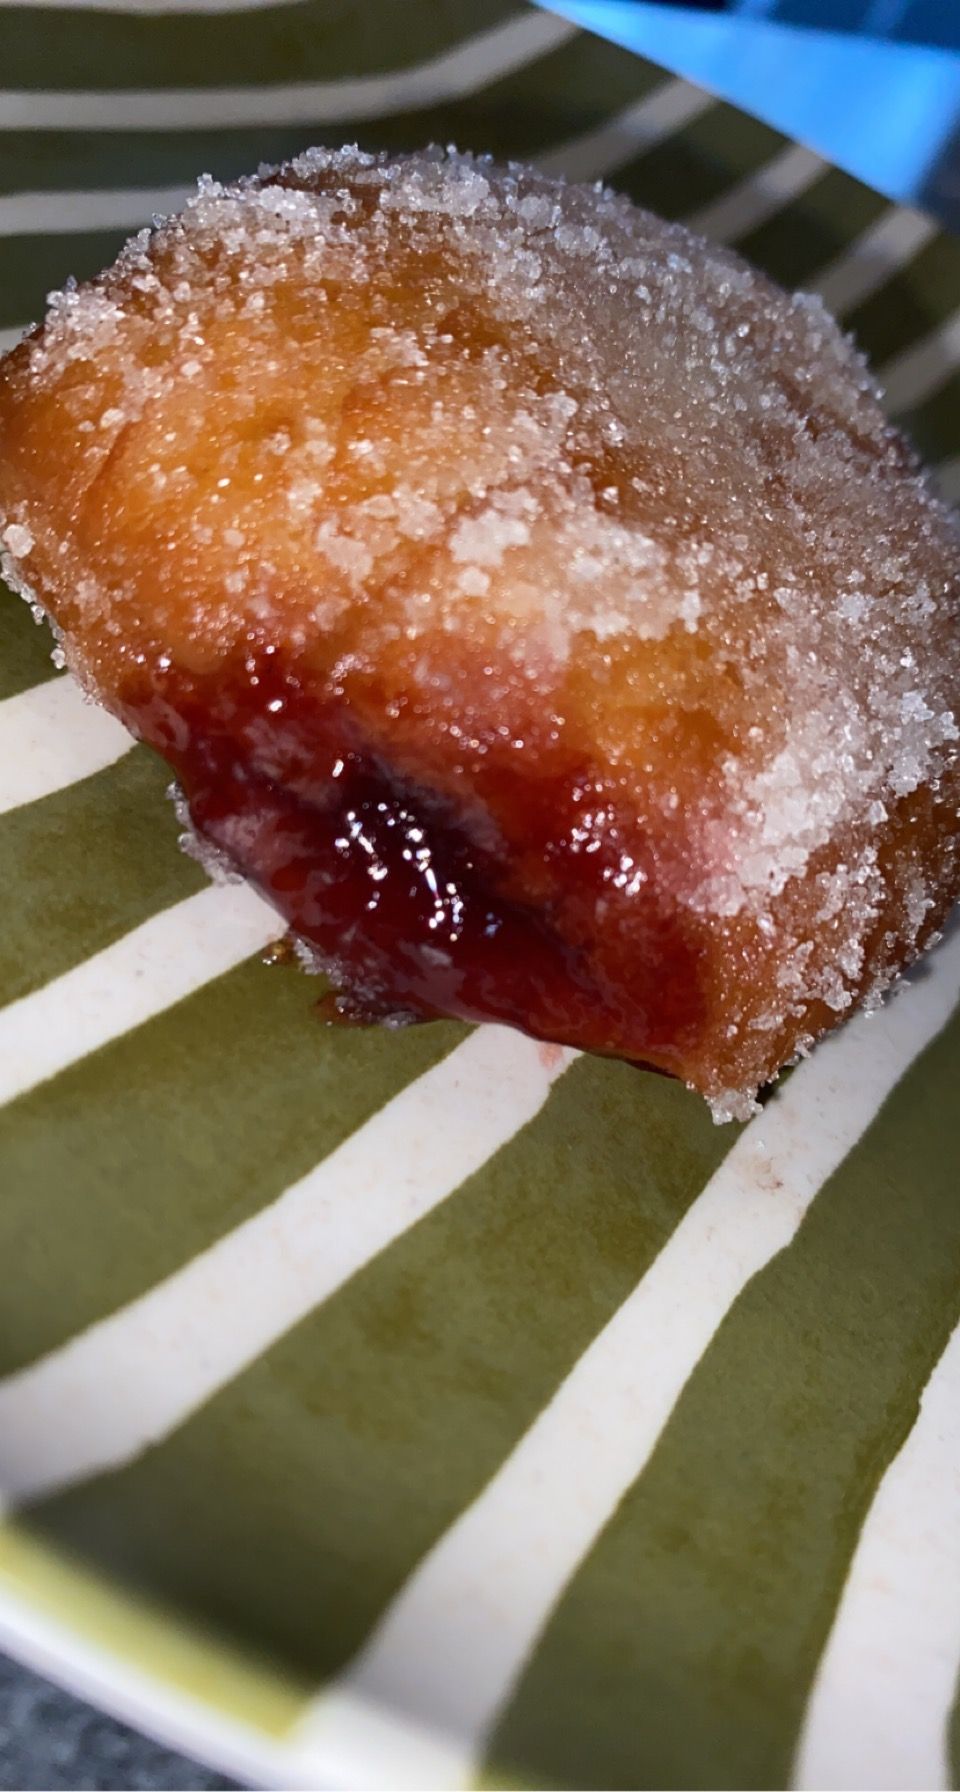 Raspberry-filled Sugar Donuts